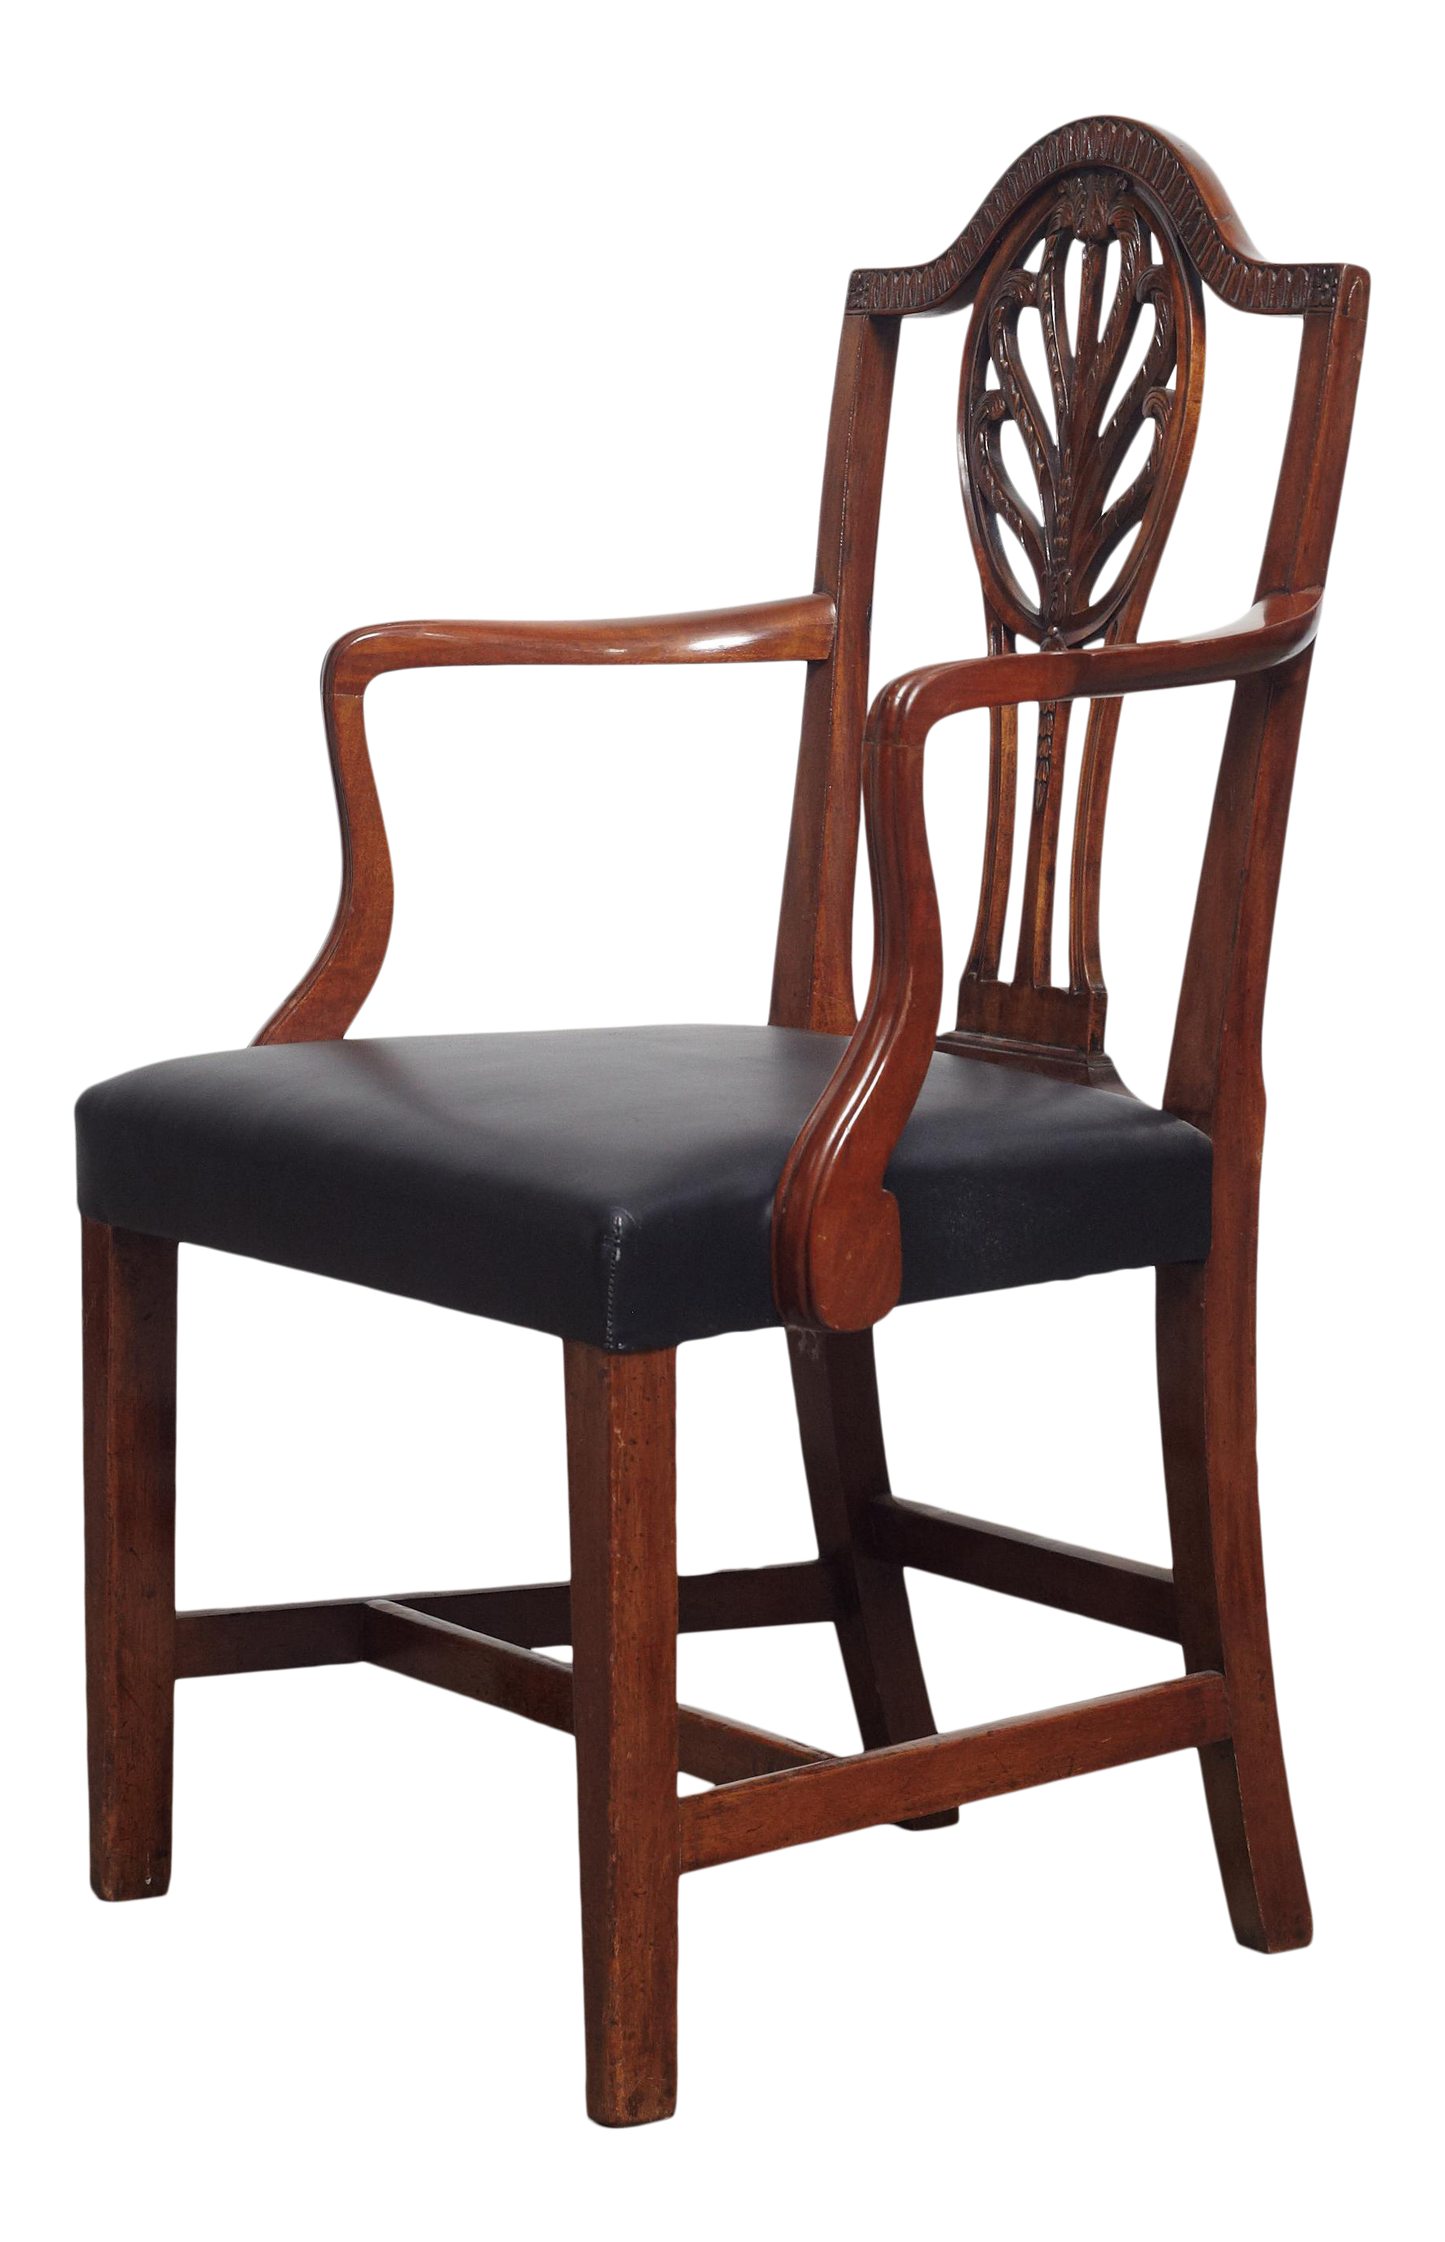 19th century Danish mahogany armchair